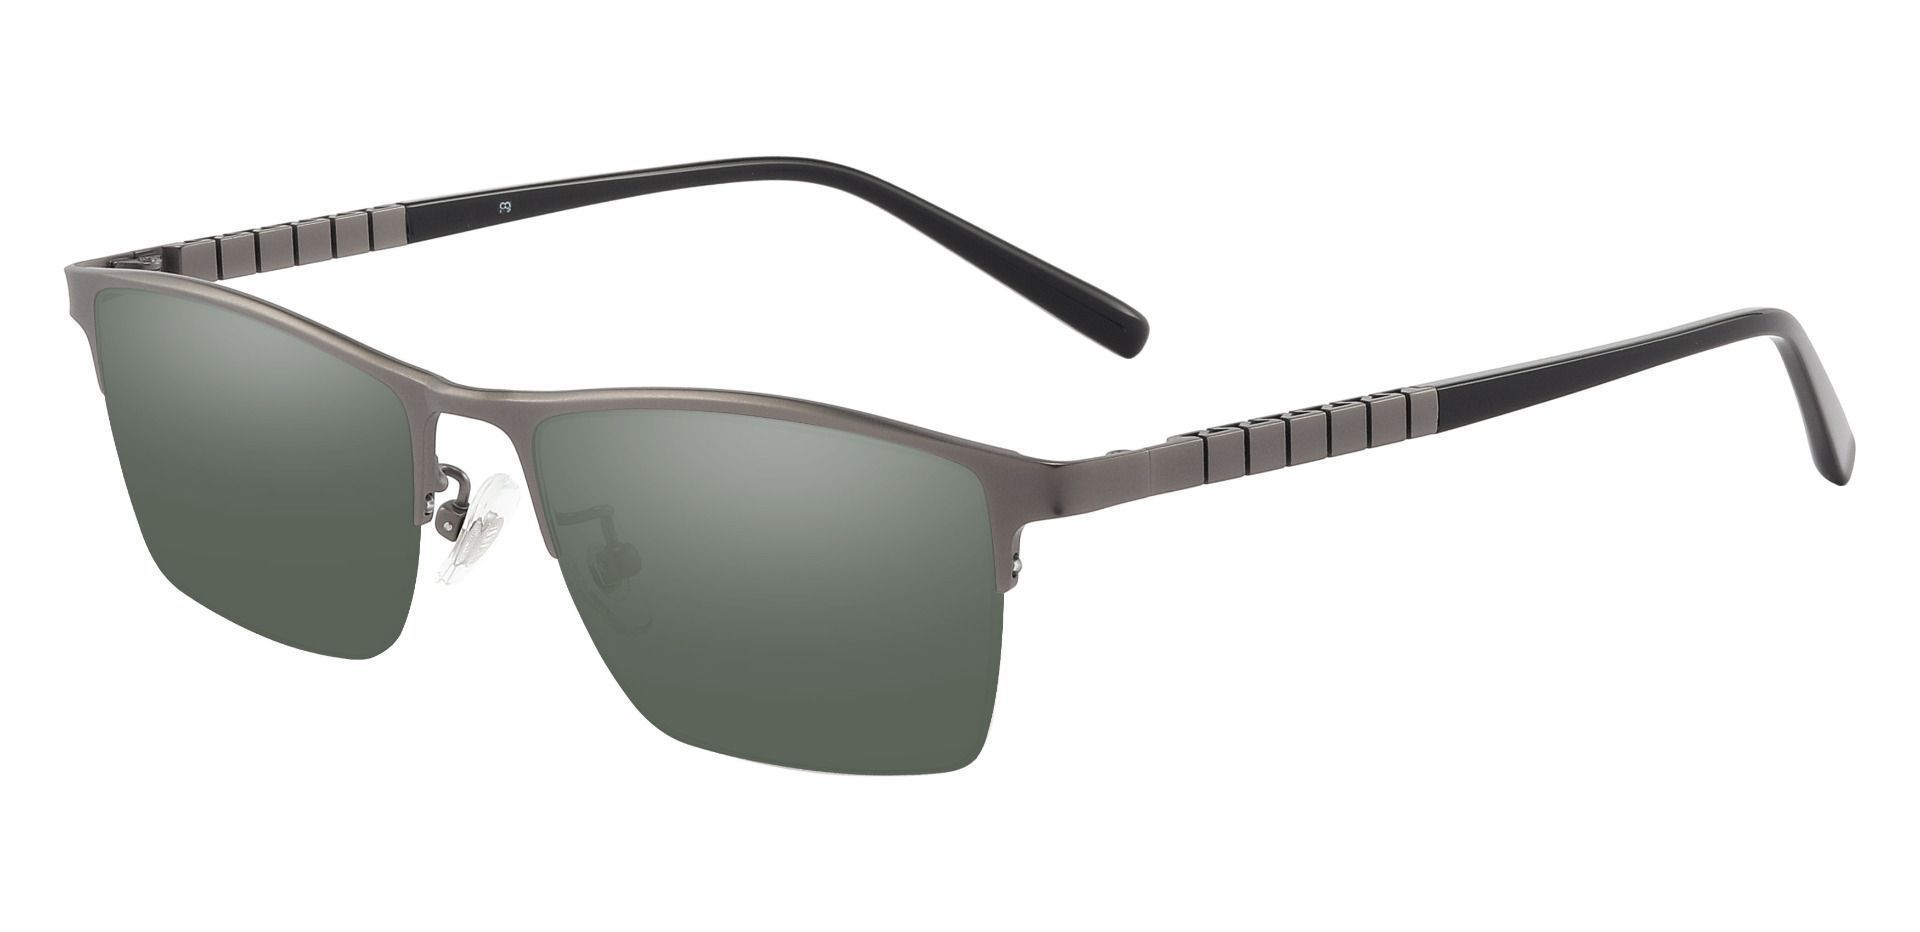 Maine Rectangle Prescription Sunglasses - Gray Frame With Green Lenses